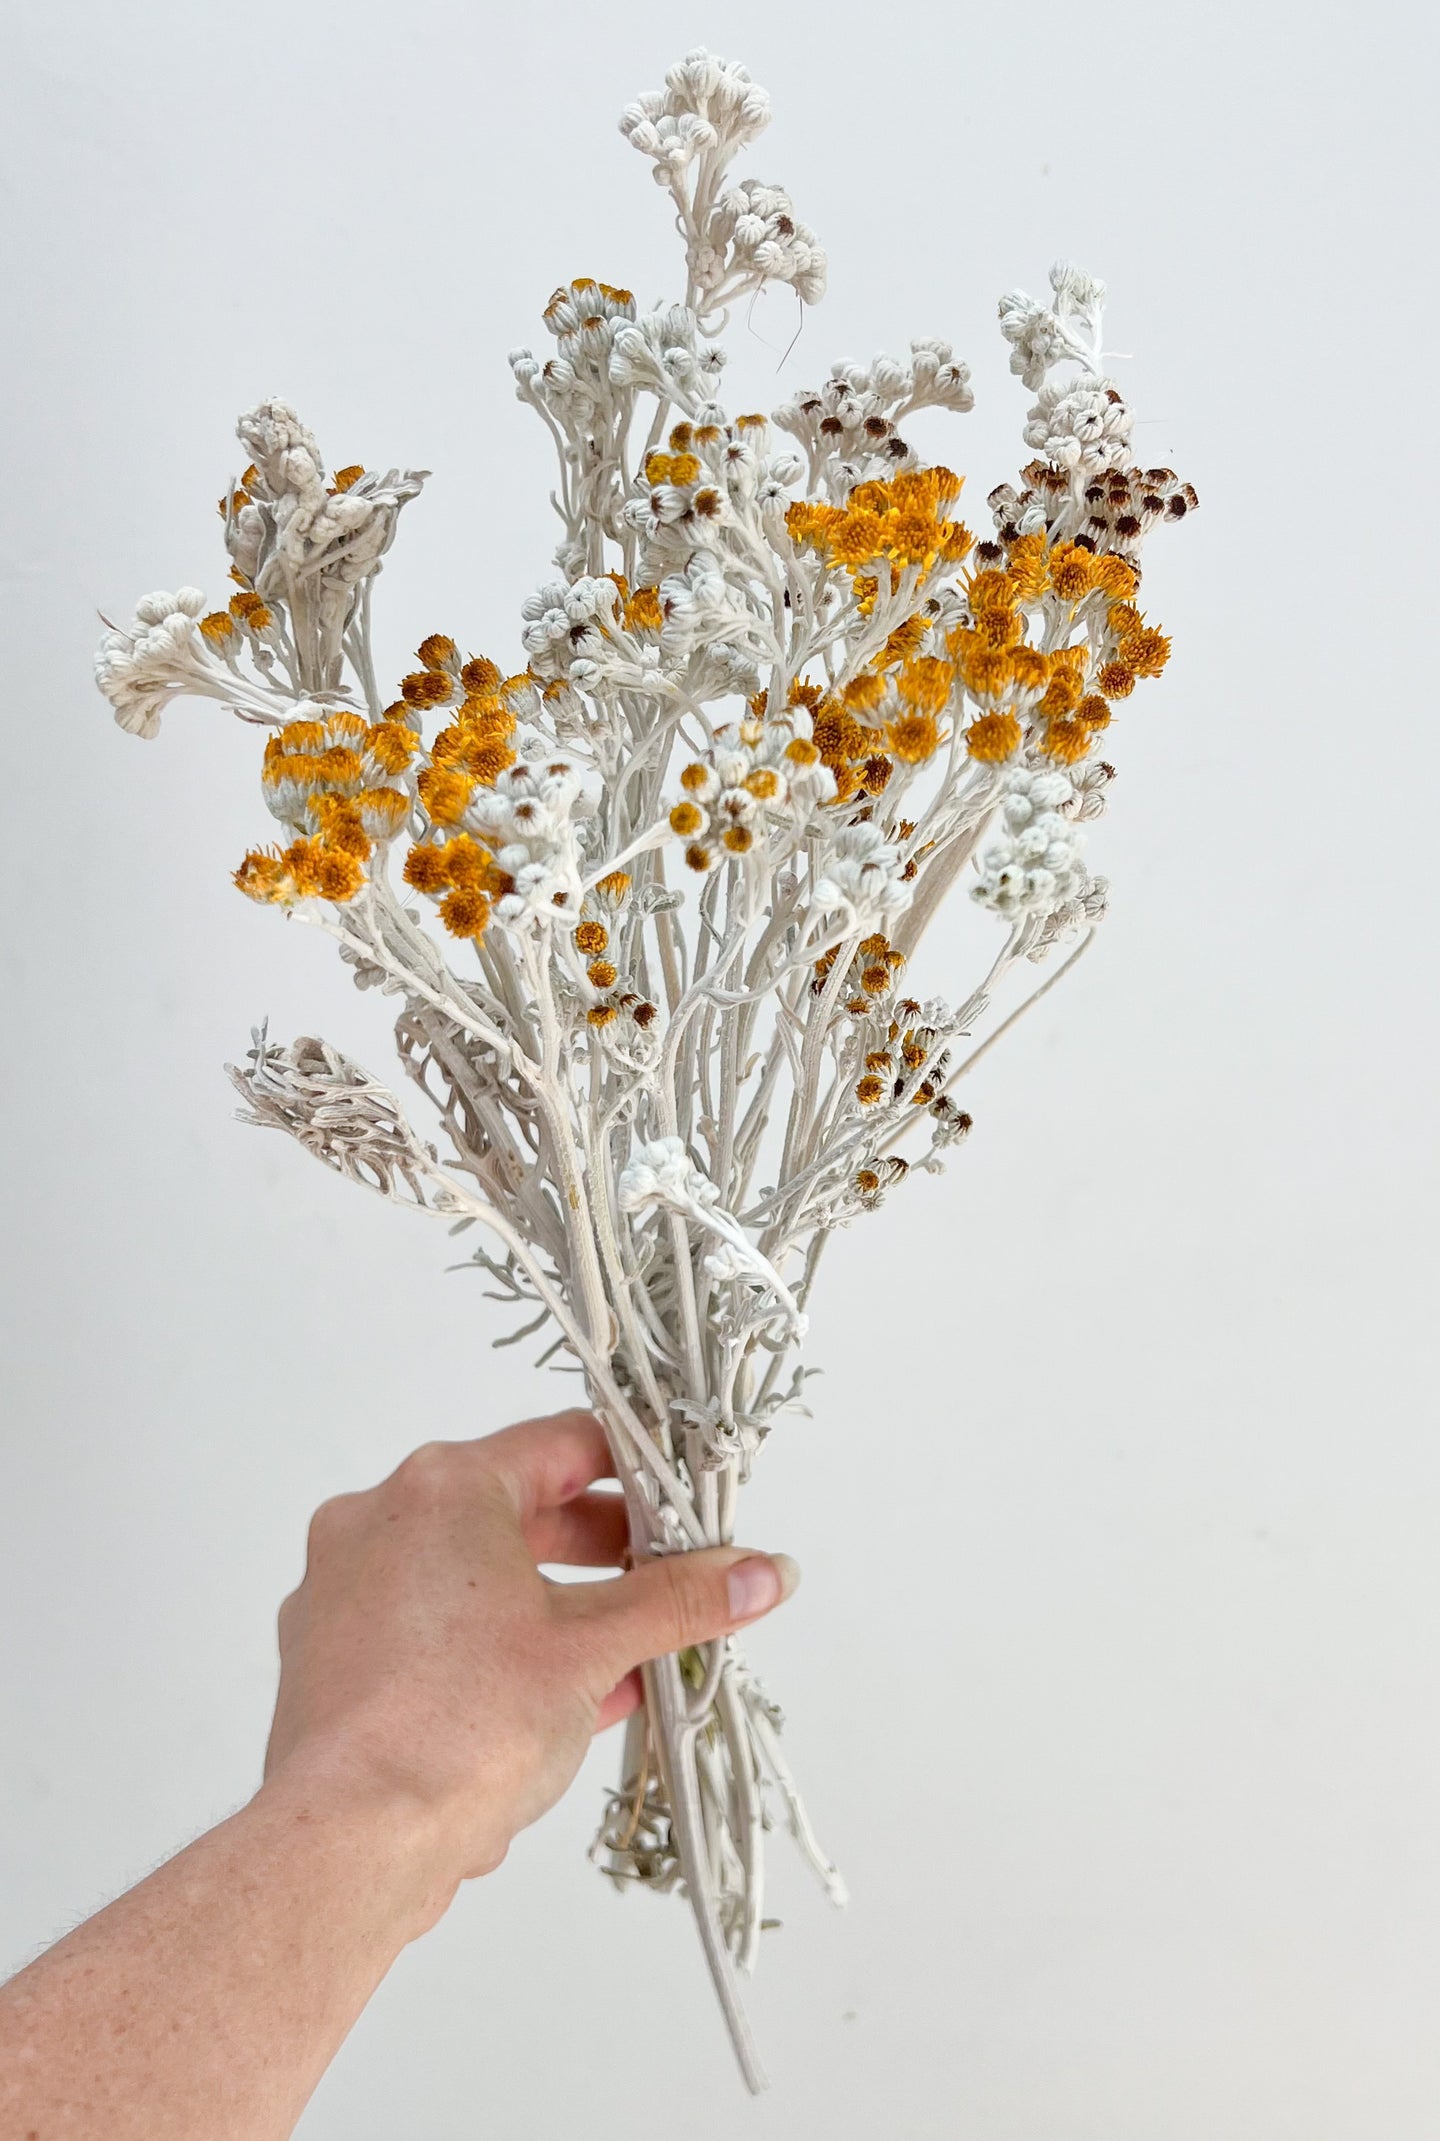 Dried Silver Dust Flowers